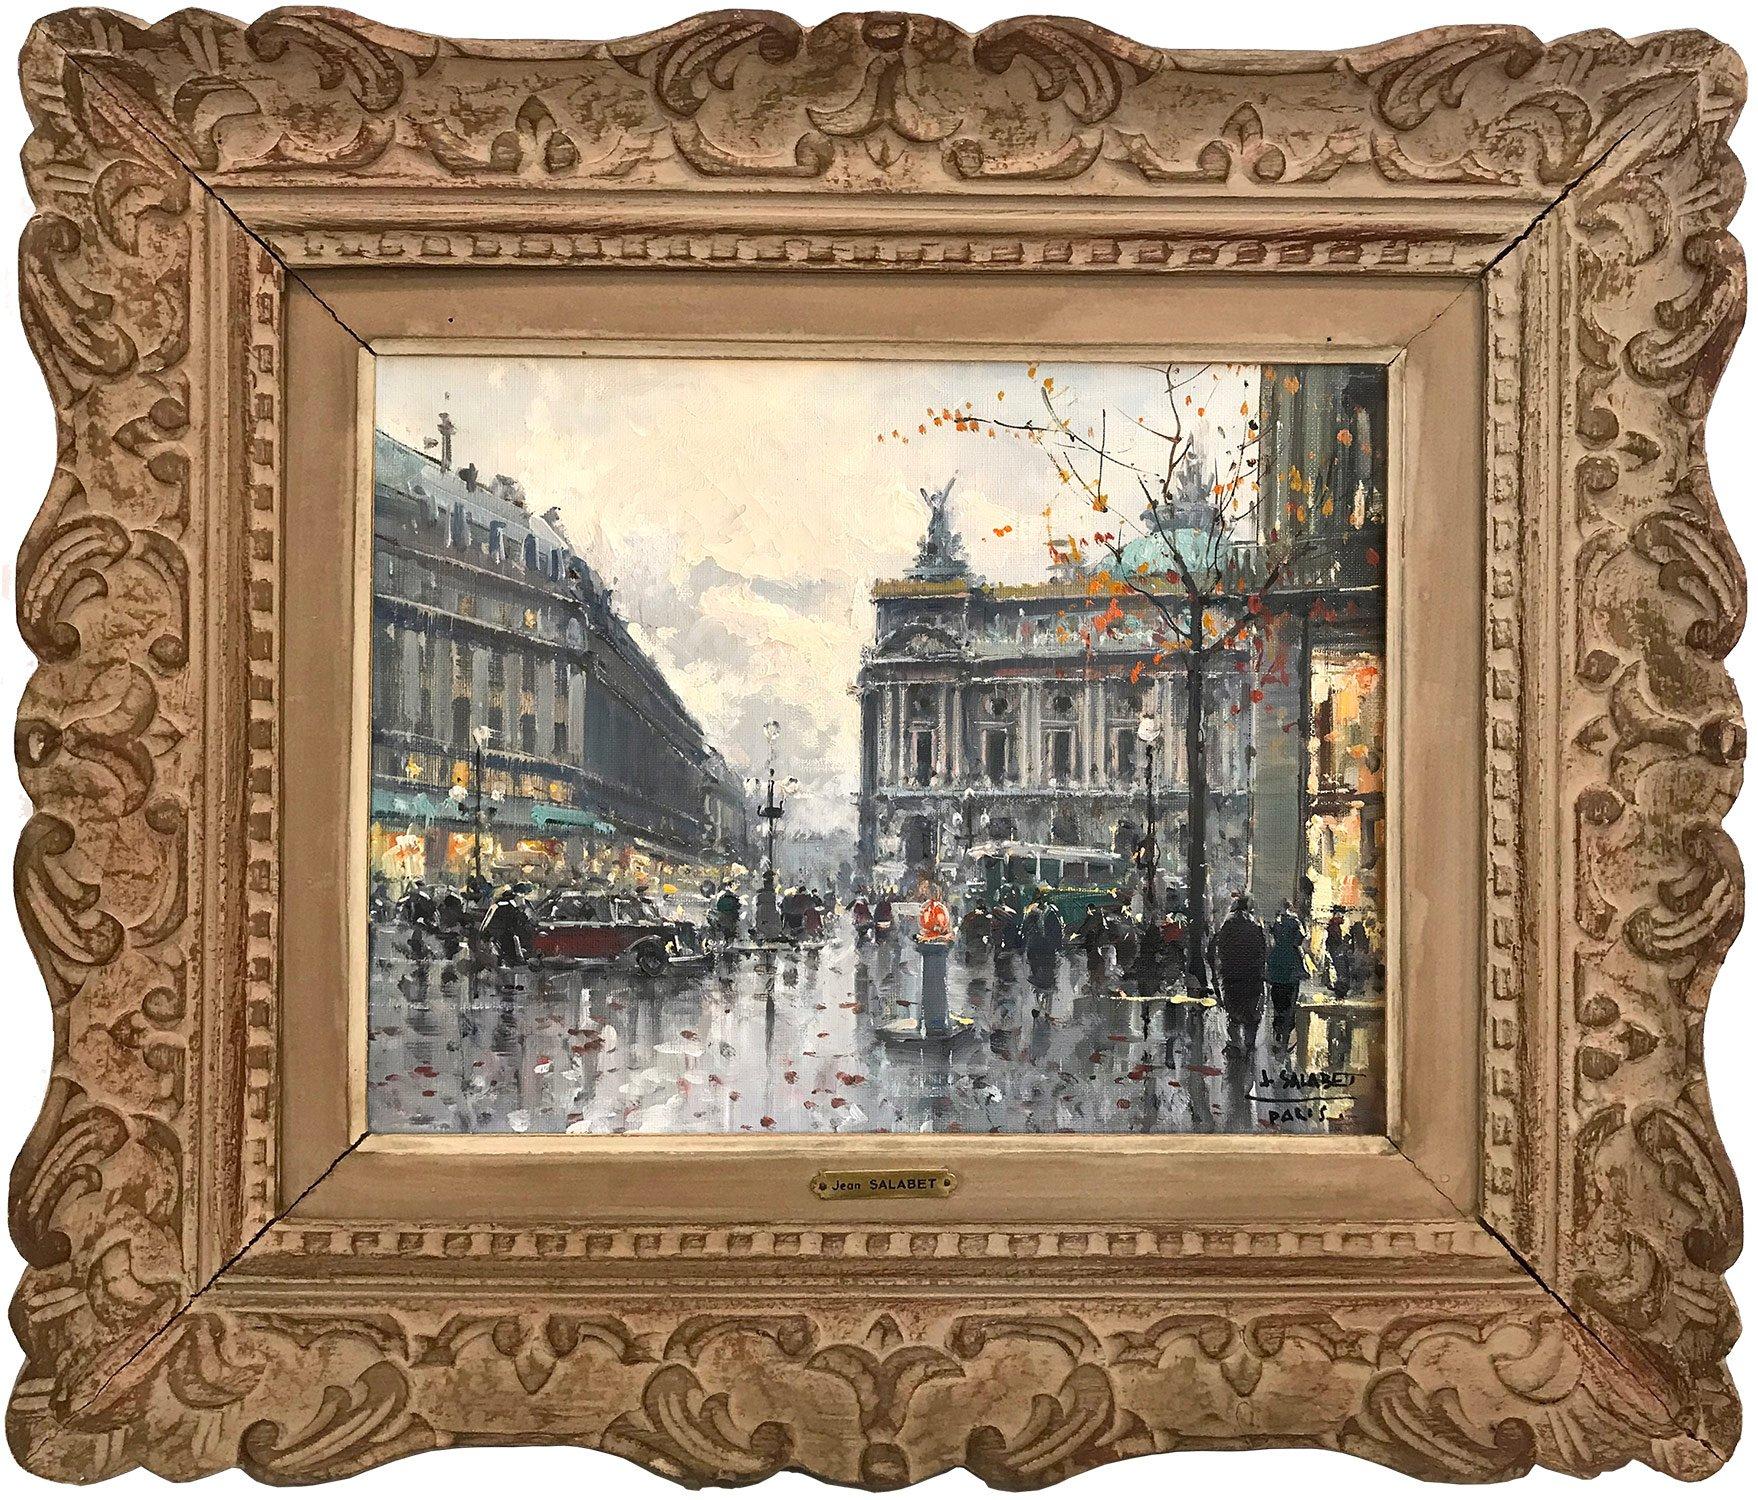 Jean Salabet Figurative Painting - "Place de l'Opéra" Impressionist Parisian Street Scene Oil Painting on Canvas